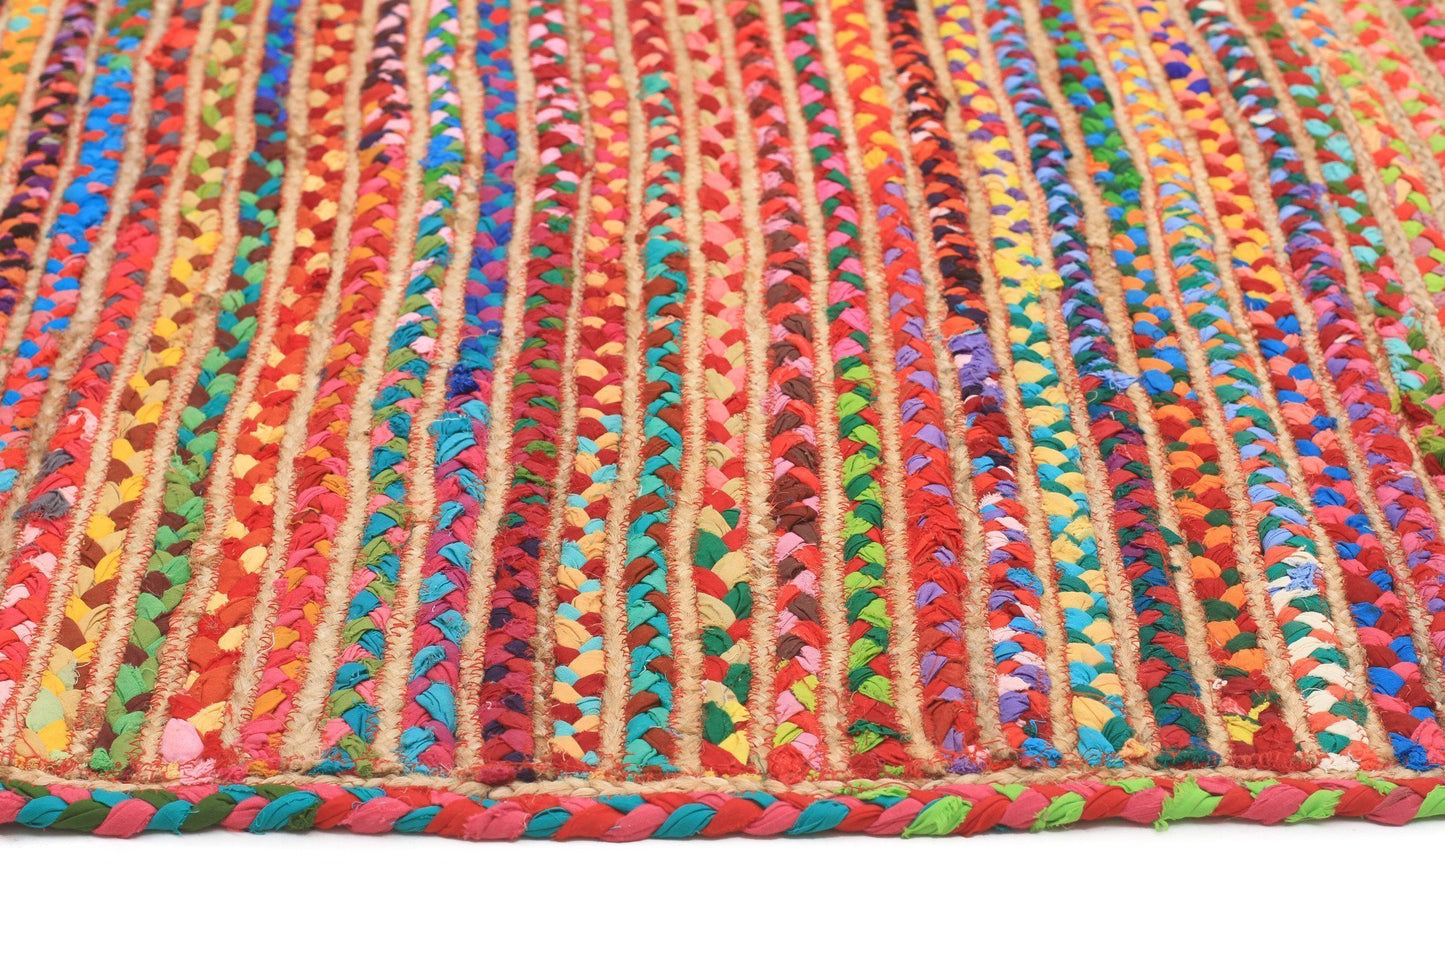 Meeka Jute & Cotton Multi-Colour Rug